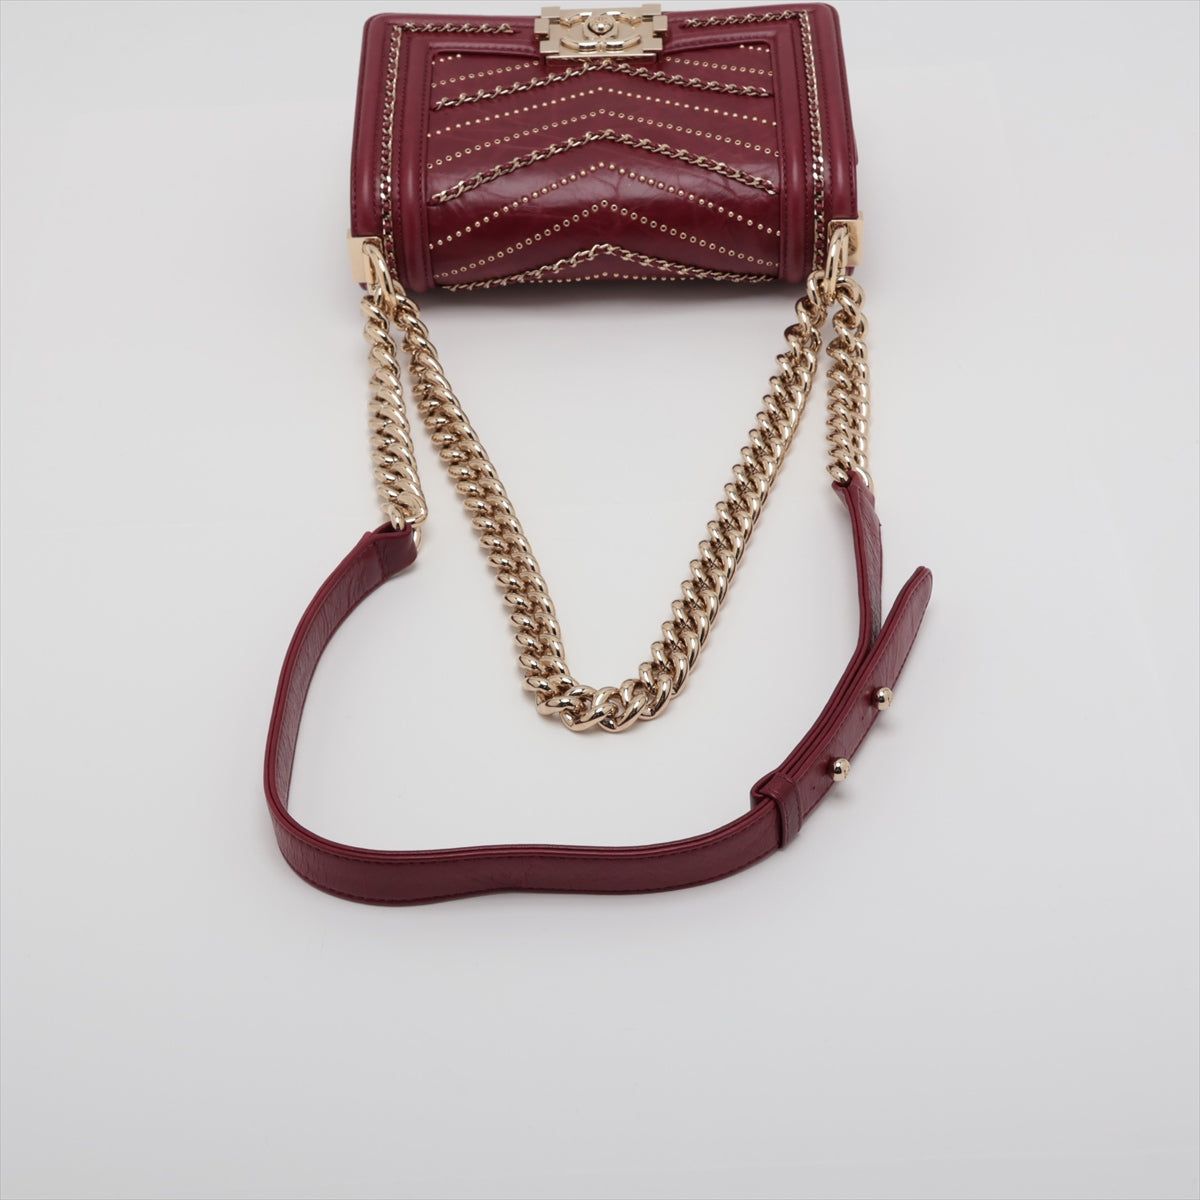 Chanel Mini Boy Chanel Leather Chain shoulder bag V Stitch Bordeaux Gold Metal fittings 26XXXXXX